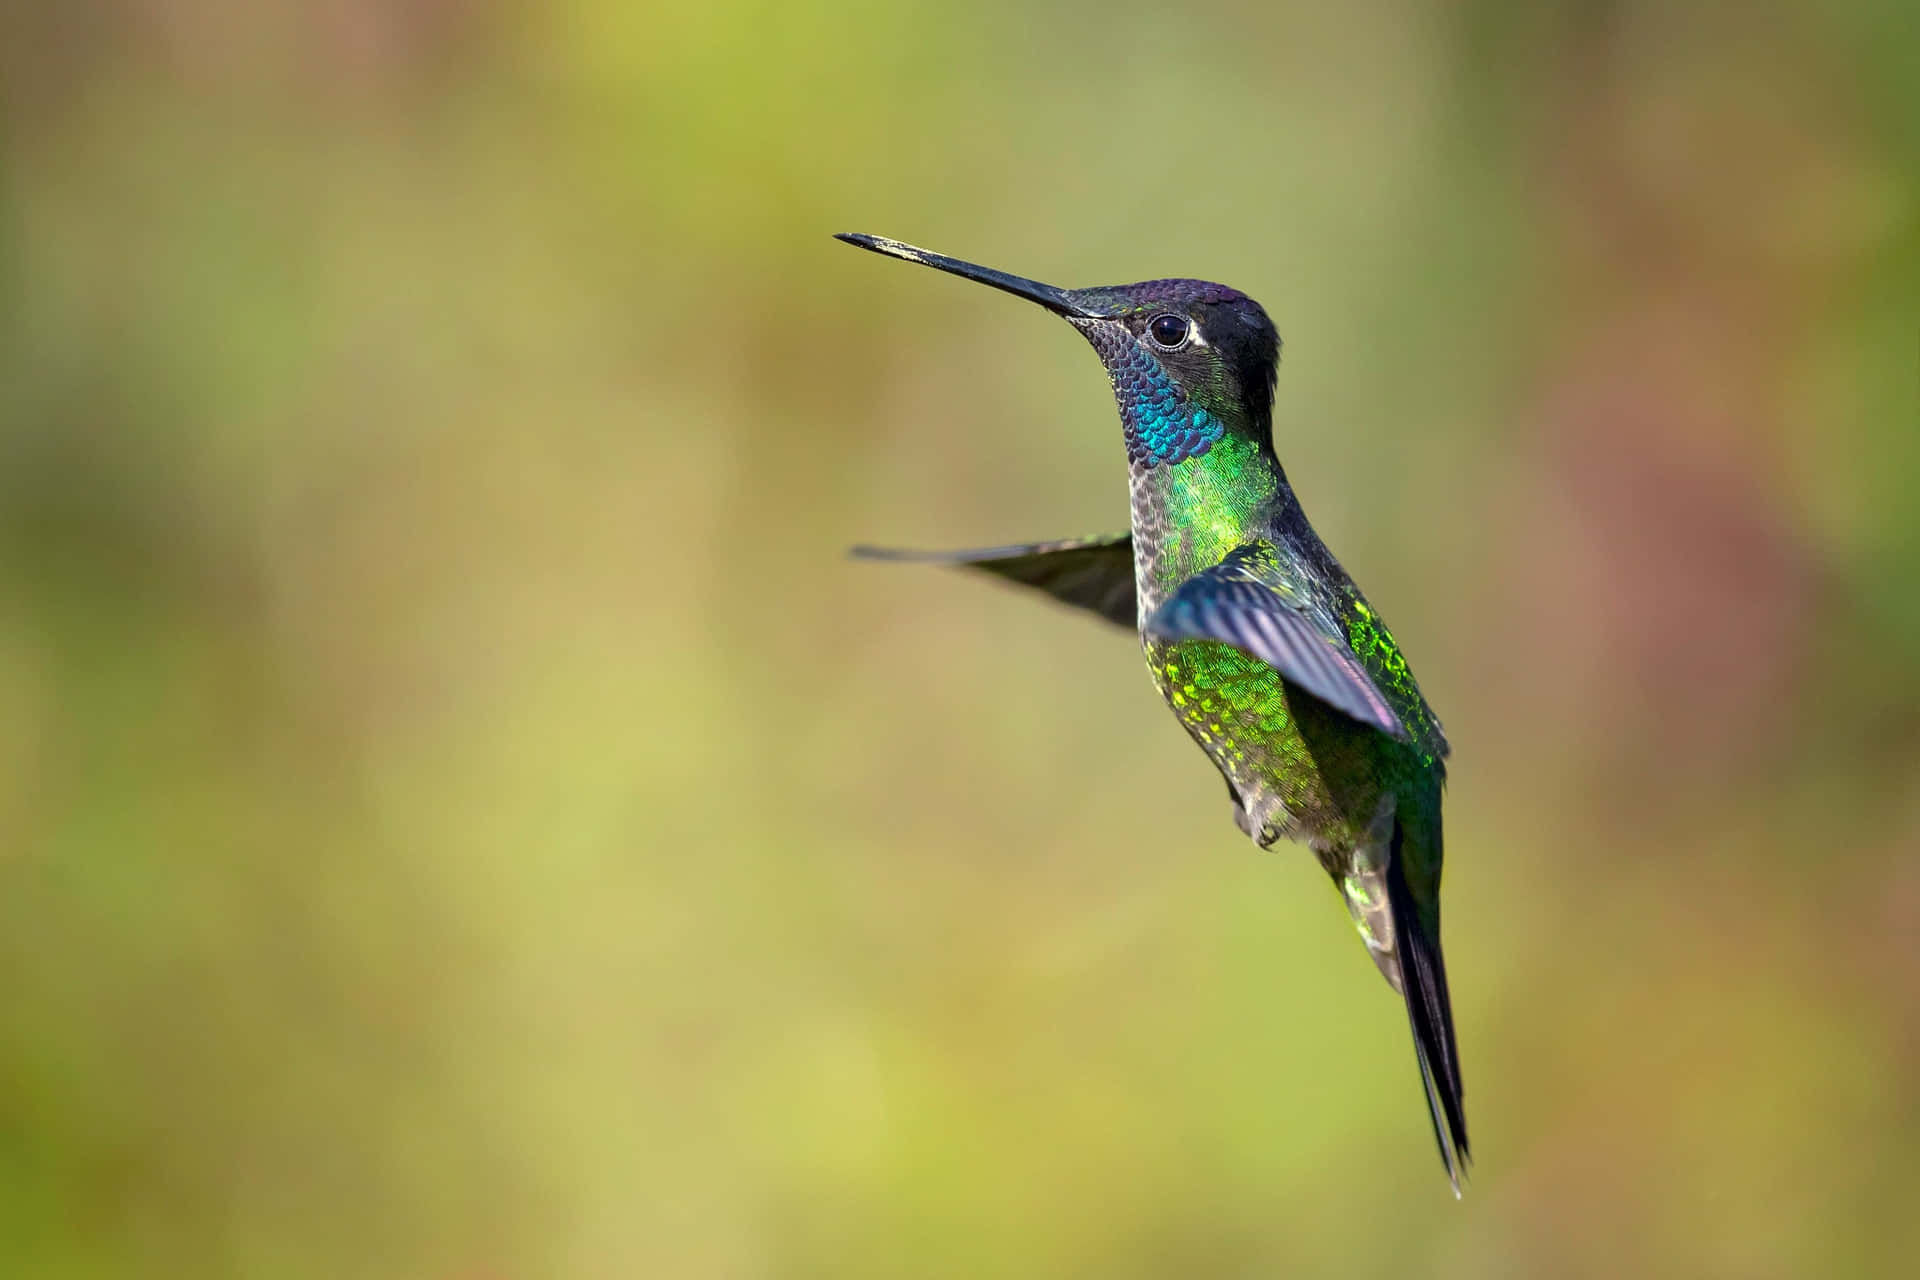 A female hummingbird gathers nectar and enjoys the morning sunlight